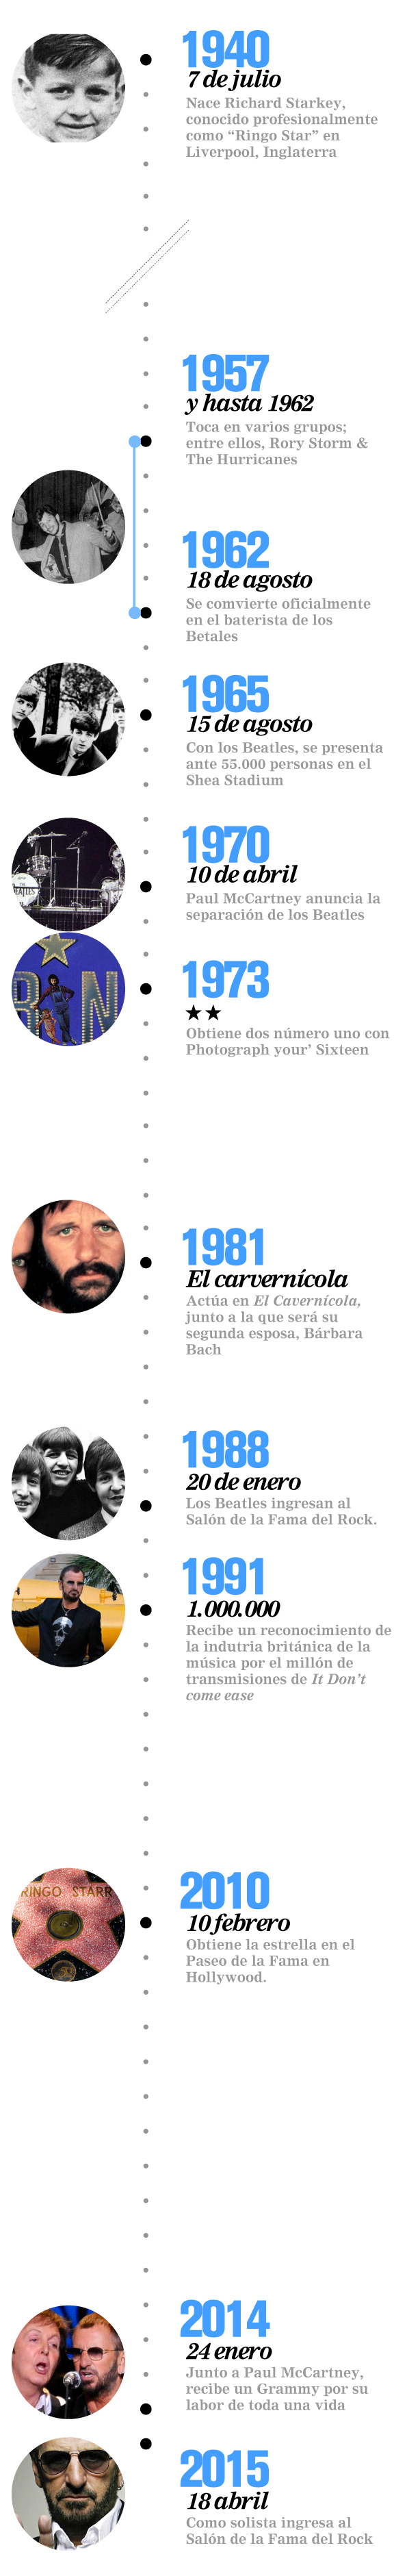 Ringo Starr timeline